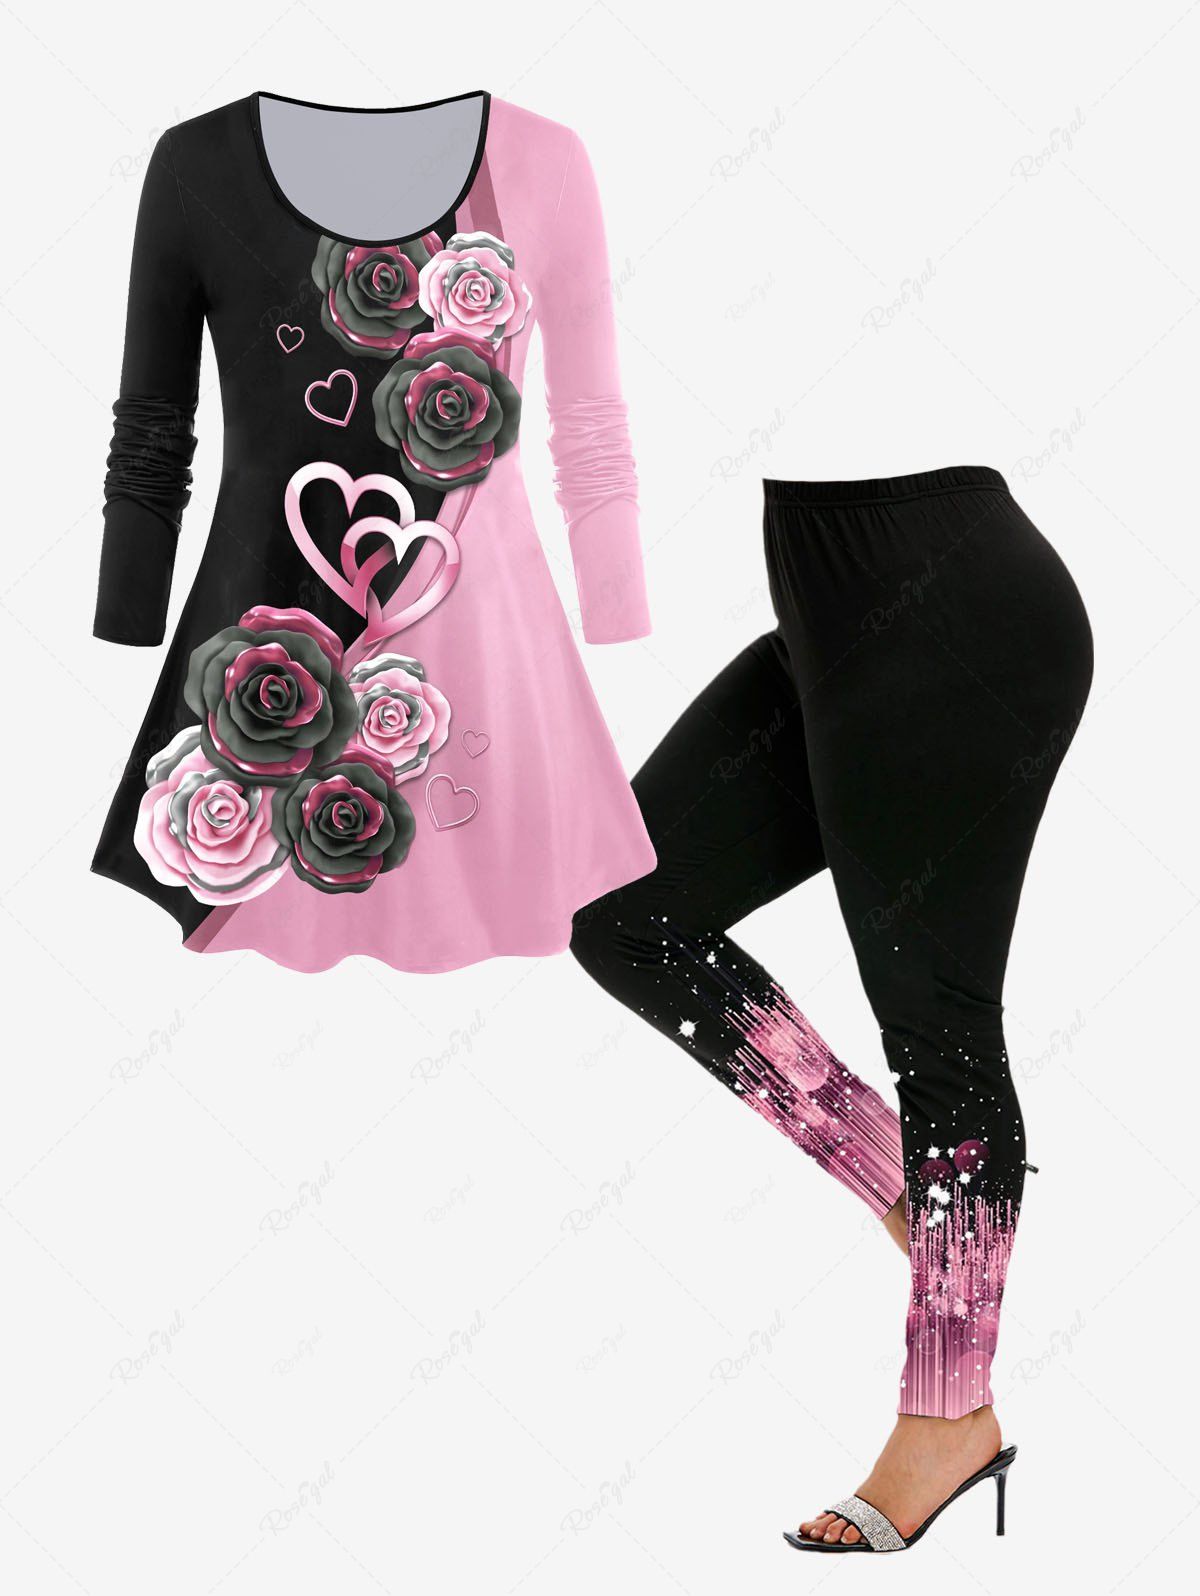 Sale Rose Heart 3D Print Colorblock T-shirt and 3D Sparkles Stripes Printed Leggings Plus Size Outfit  